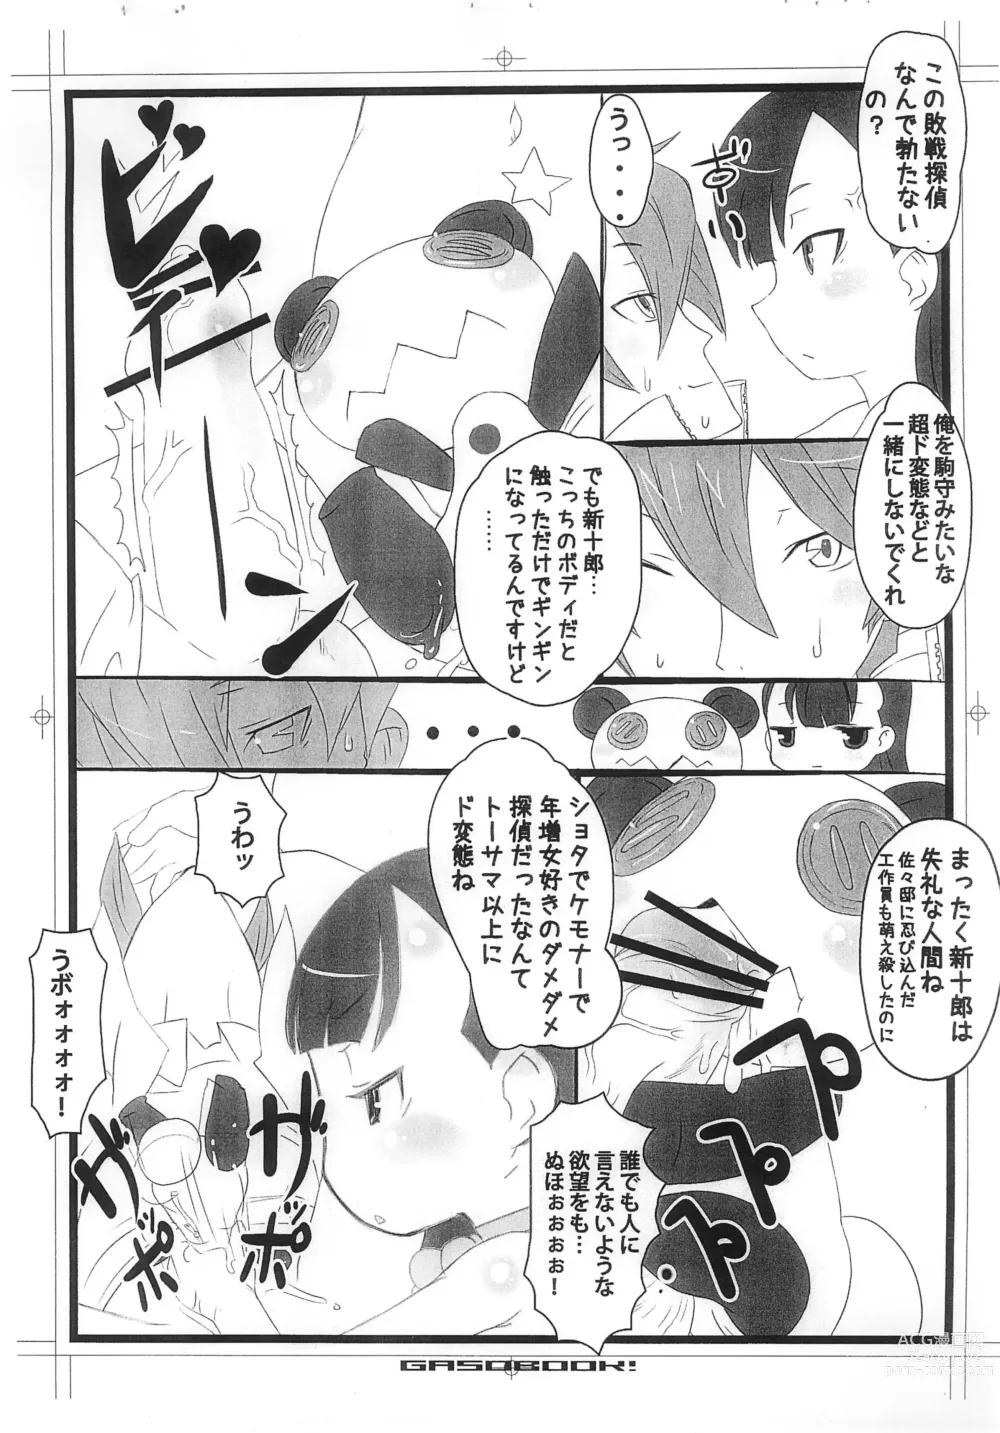 Page 6 of doujinshi U GASOBook.1112